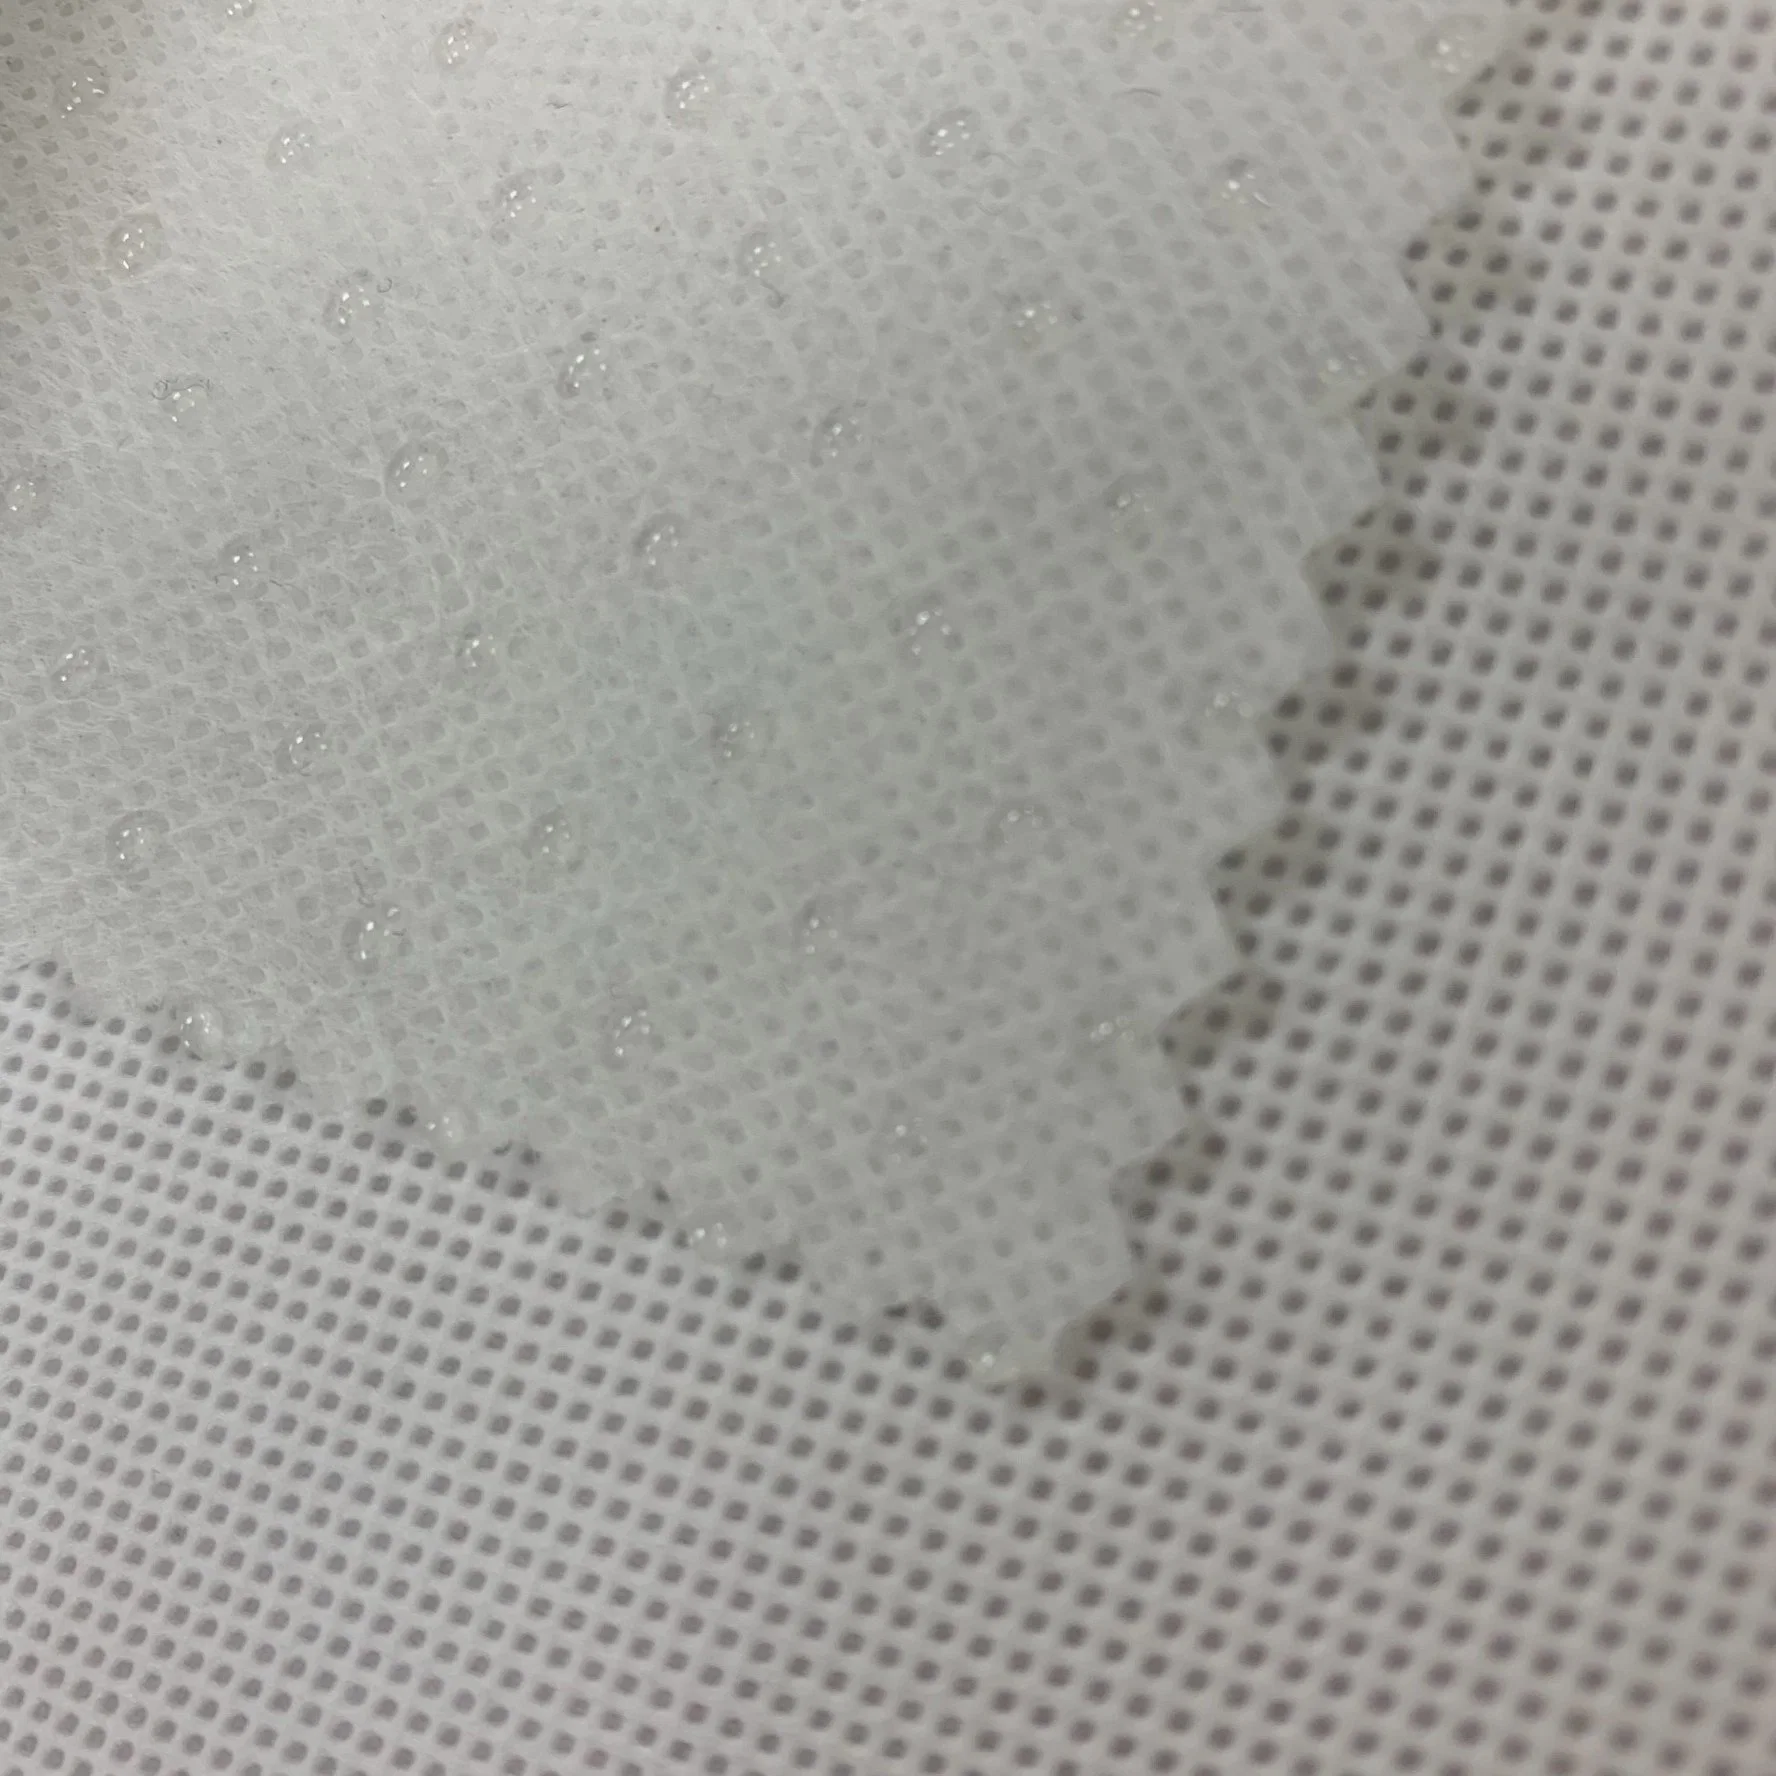 Antislip PVC Silicone Dots Carpet Underlay Non-Slip Nonwoven Felt Fabric Base Cloth